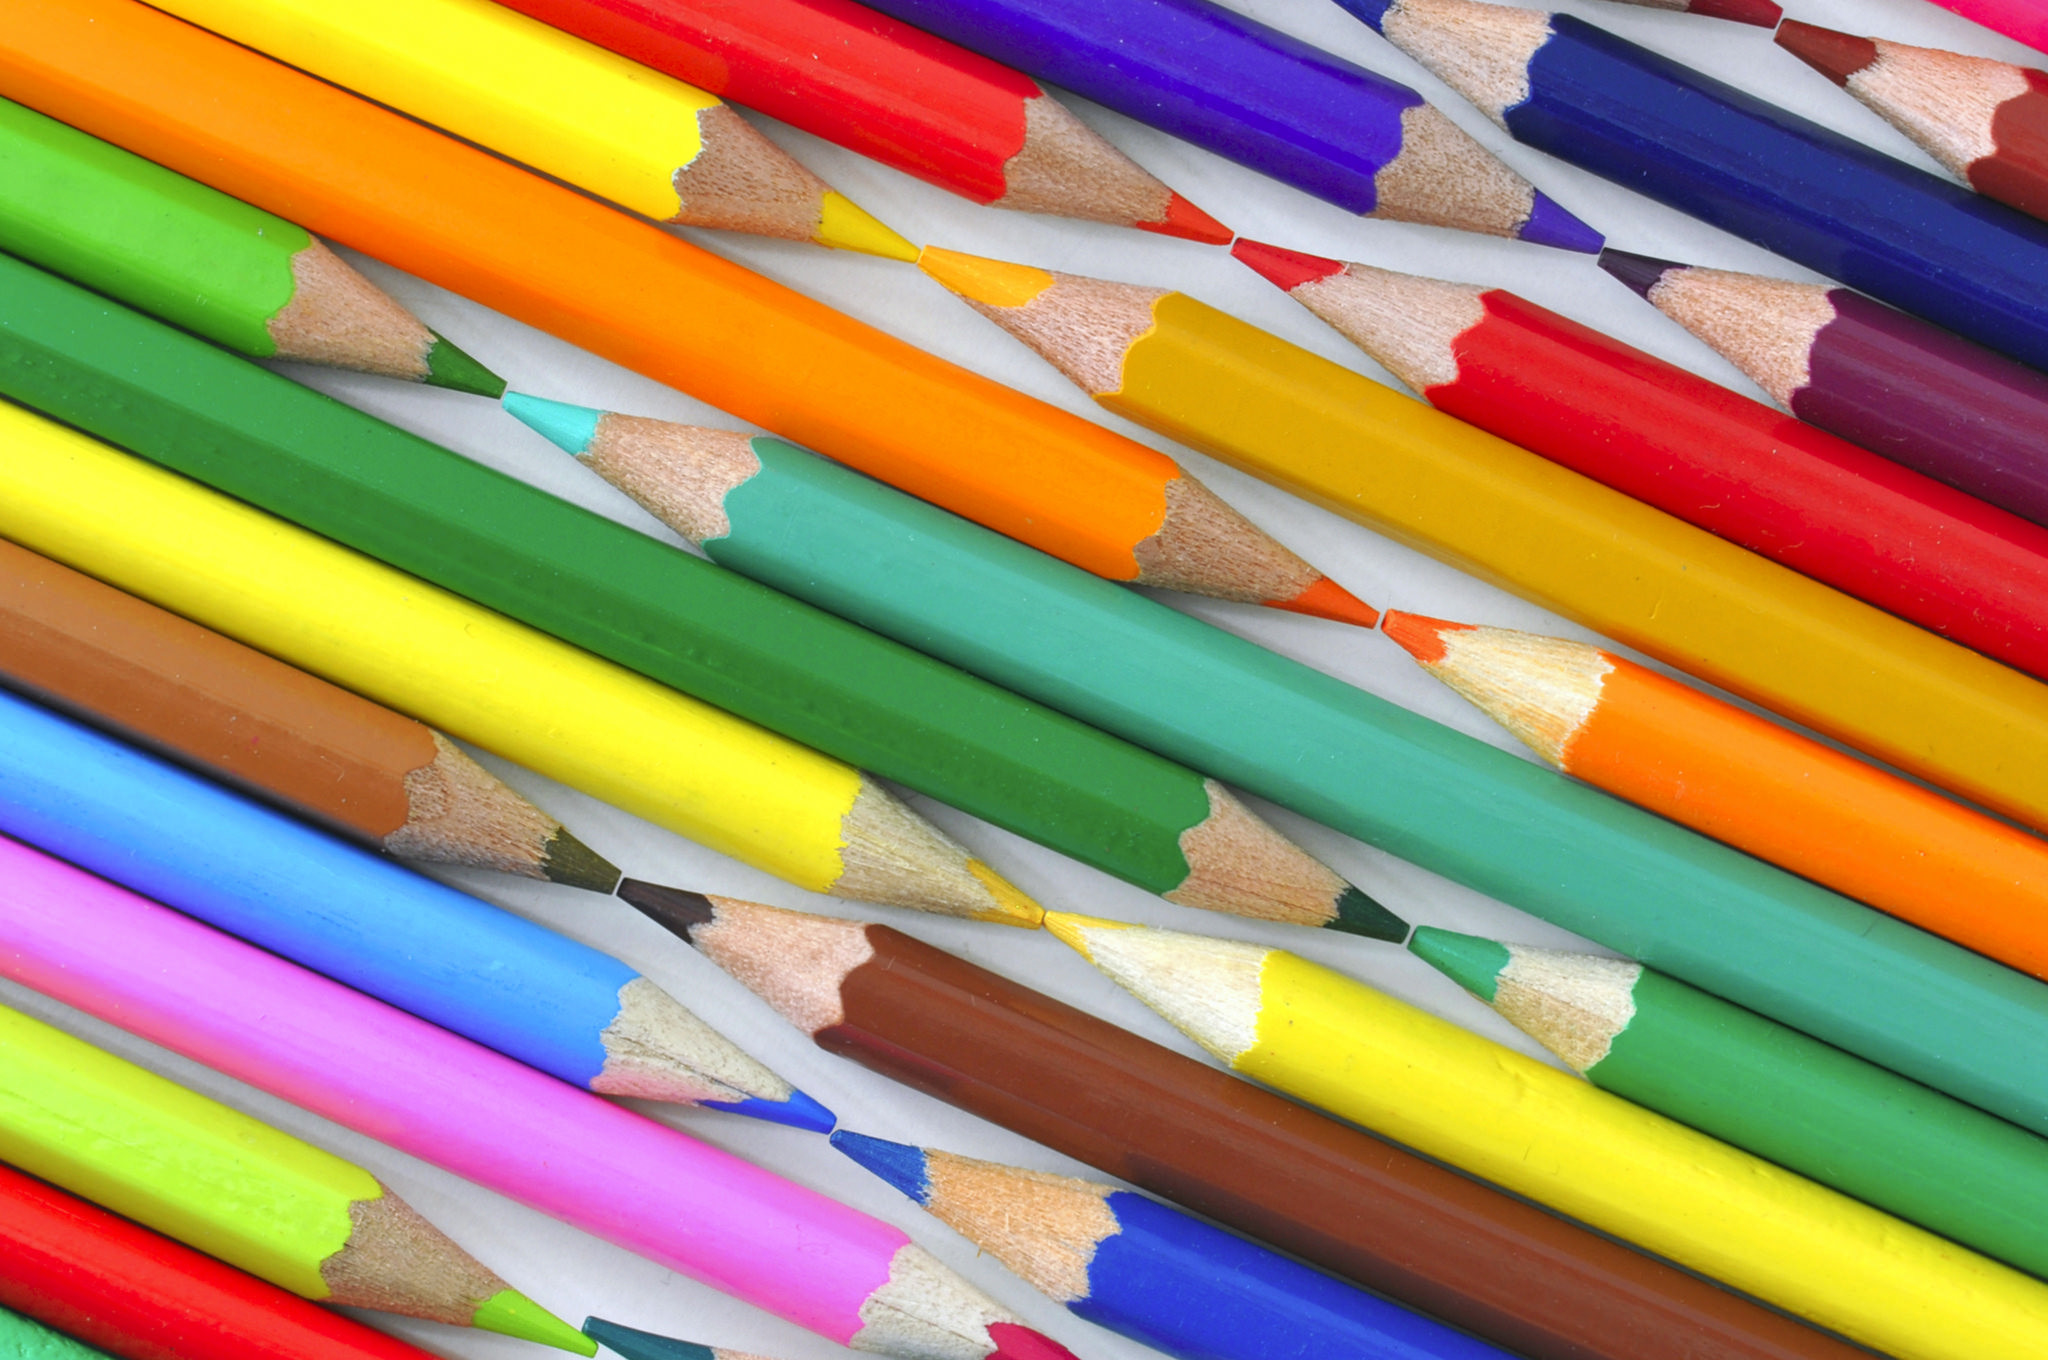 miscellanea, miscellaneous, colored pencils, pencils, rod, colour pencils, kernel